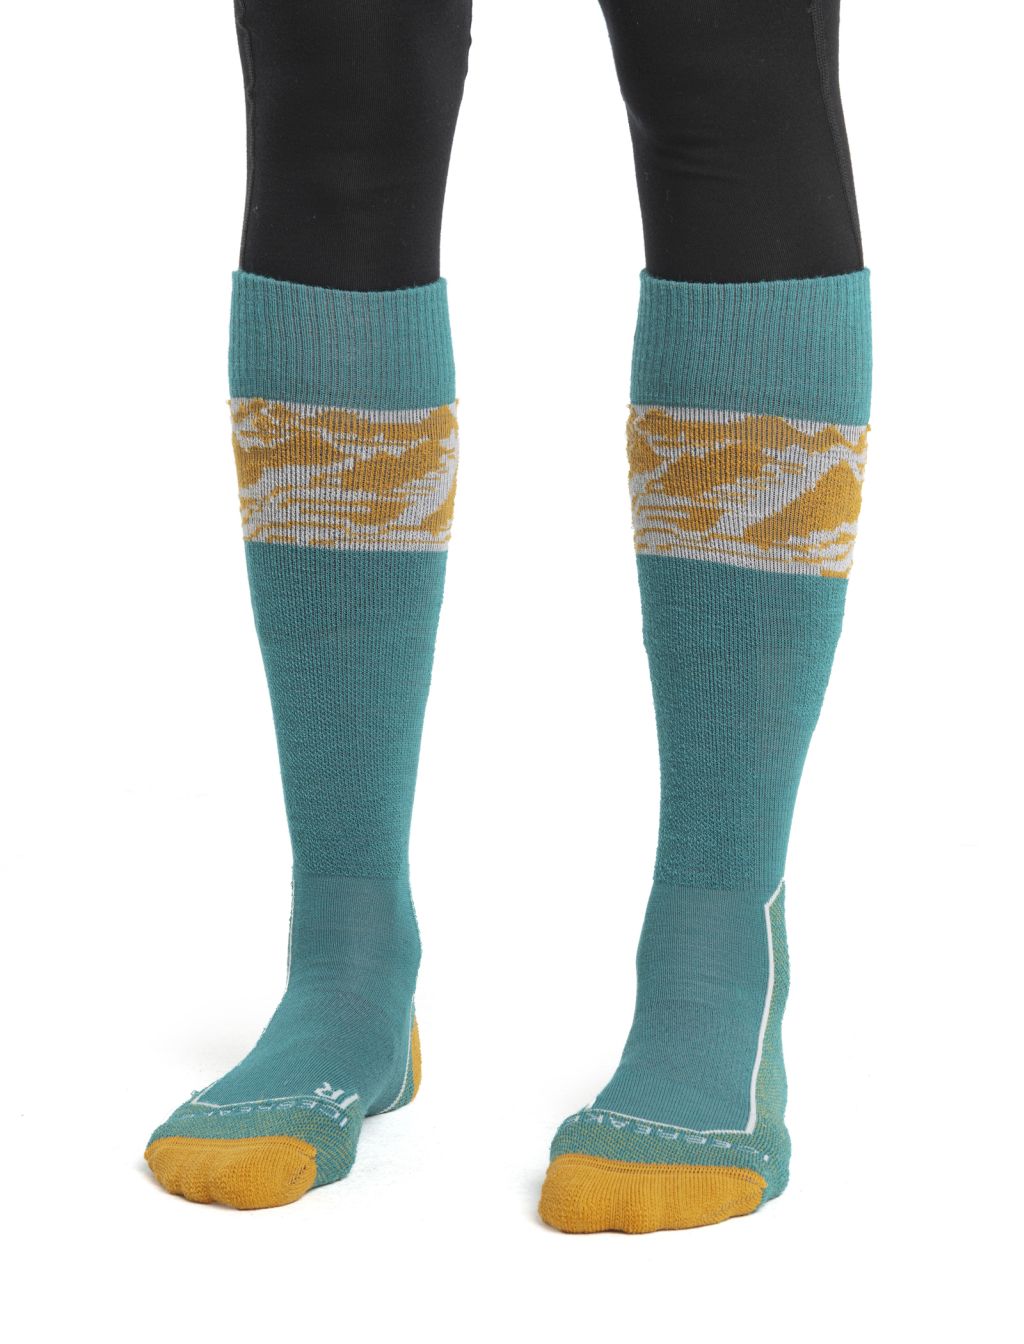 Dámské merino ponožky ICEBREAKER Wmns Ski+ Light OTC Alps 3D, Flux Green/Solar/Snow velikost: 35-37 (S)